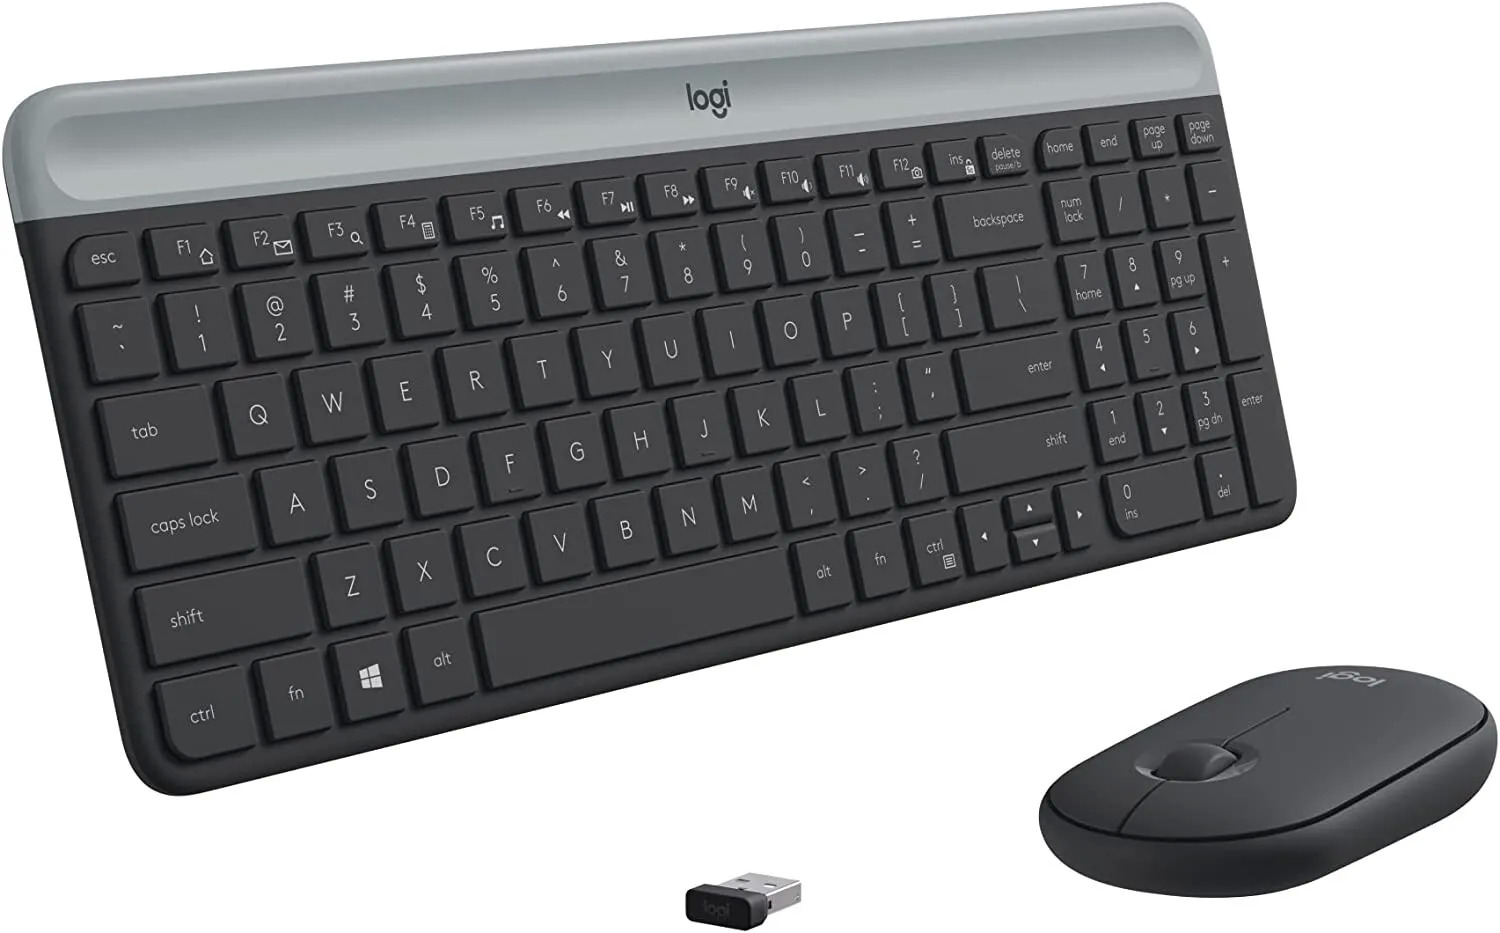 Logitech MK470 Wireless Keyboard & Mouse Combo (Open Box) - $14.99 + Free Ship (When bought 2)